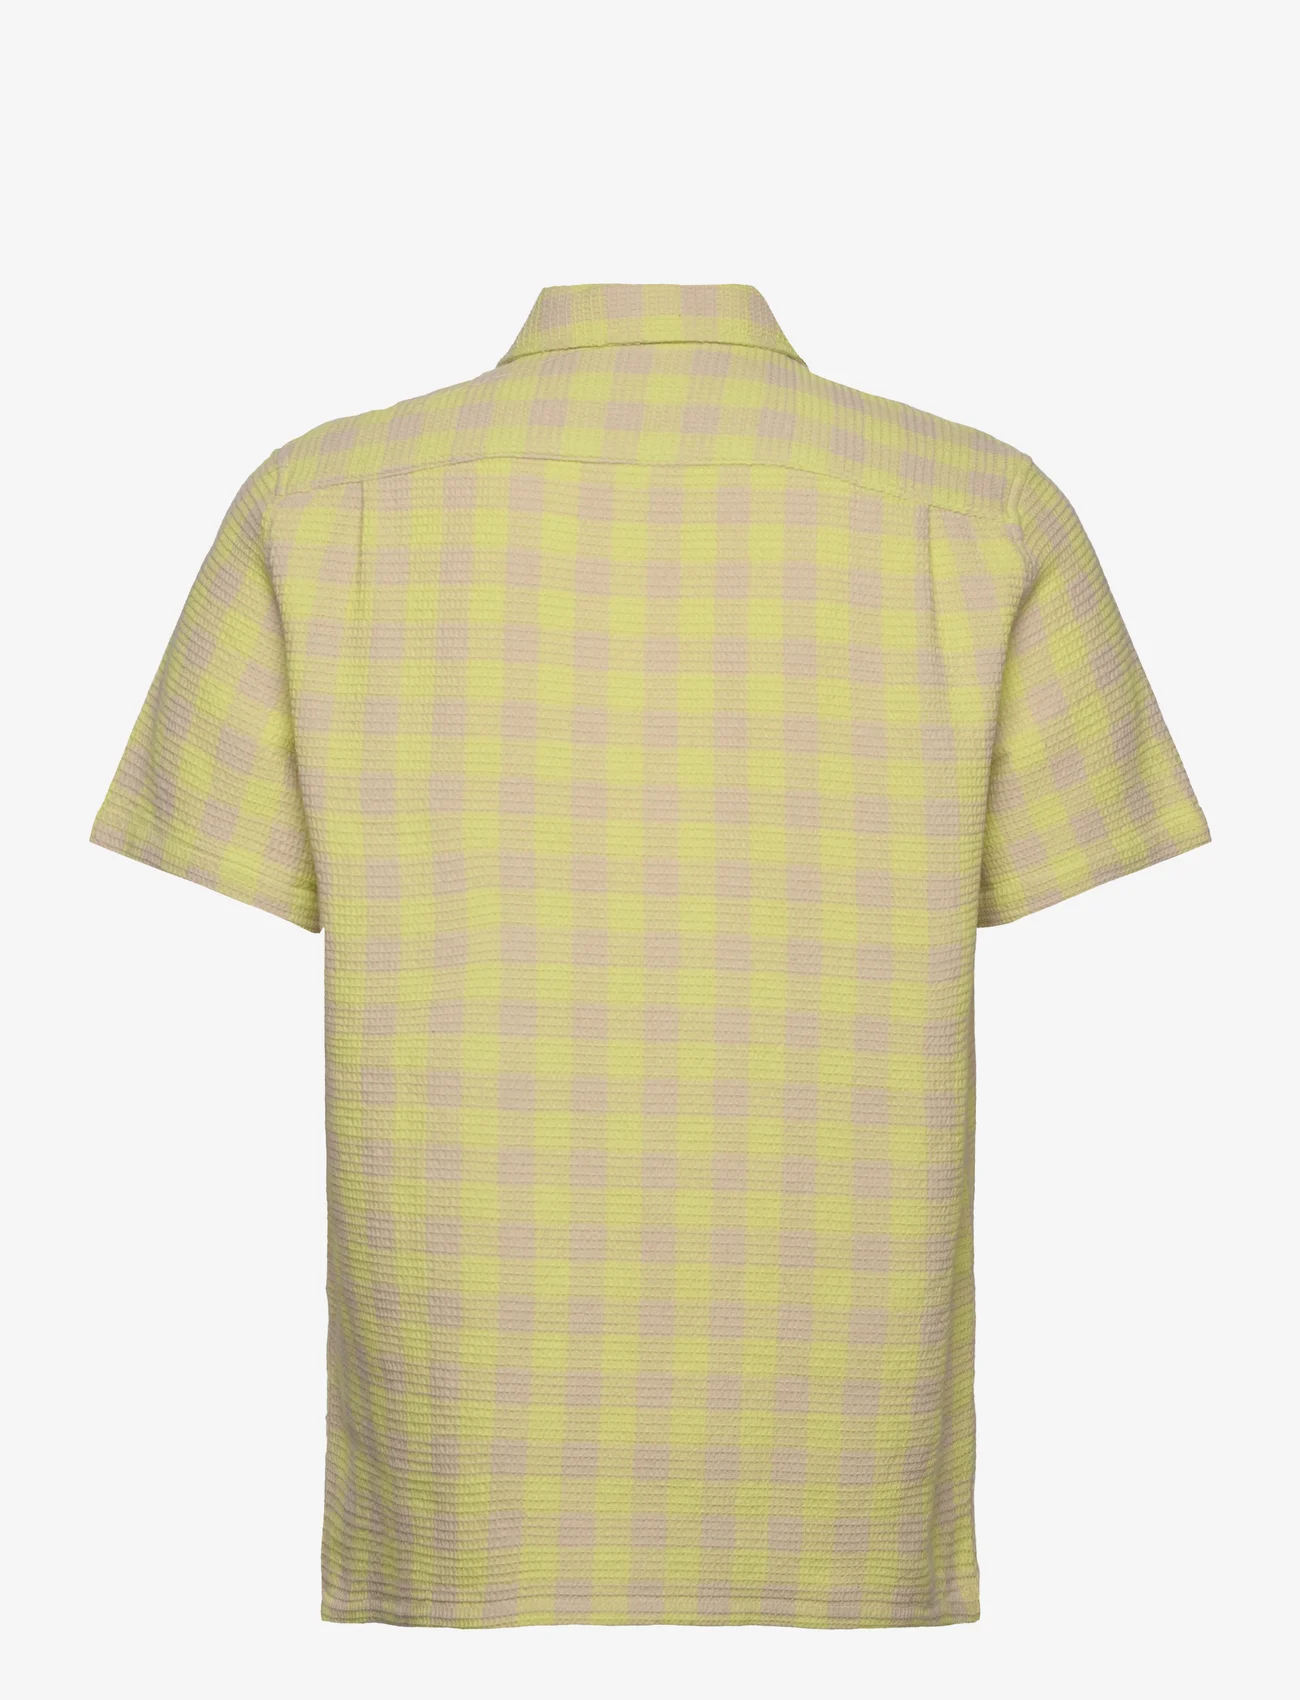 Samsøe Samsøe - Avan JJ shirt 14685 - kortærmede t-shirts - daiquiri green ch. - 1